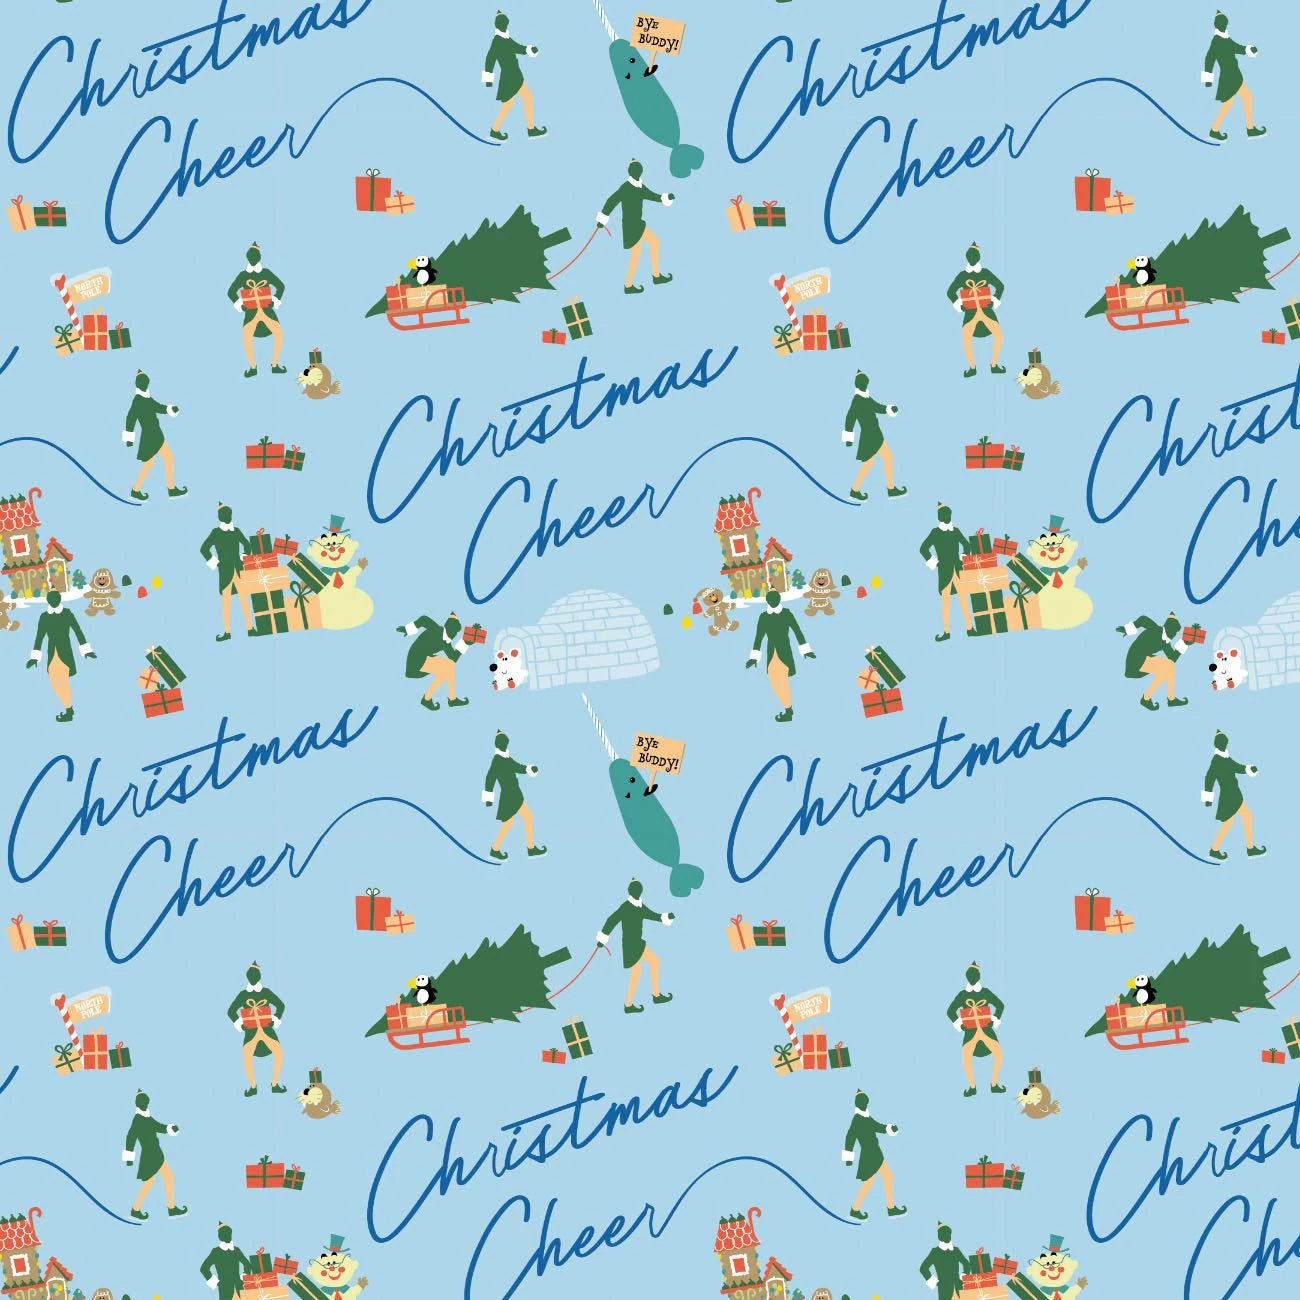 Character Winter Holiday III - Elf Christmas Cheer